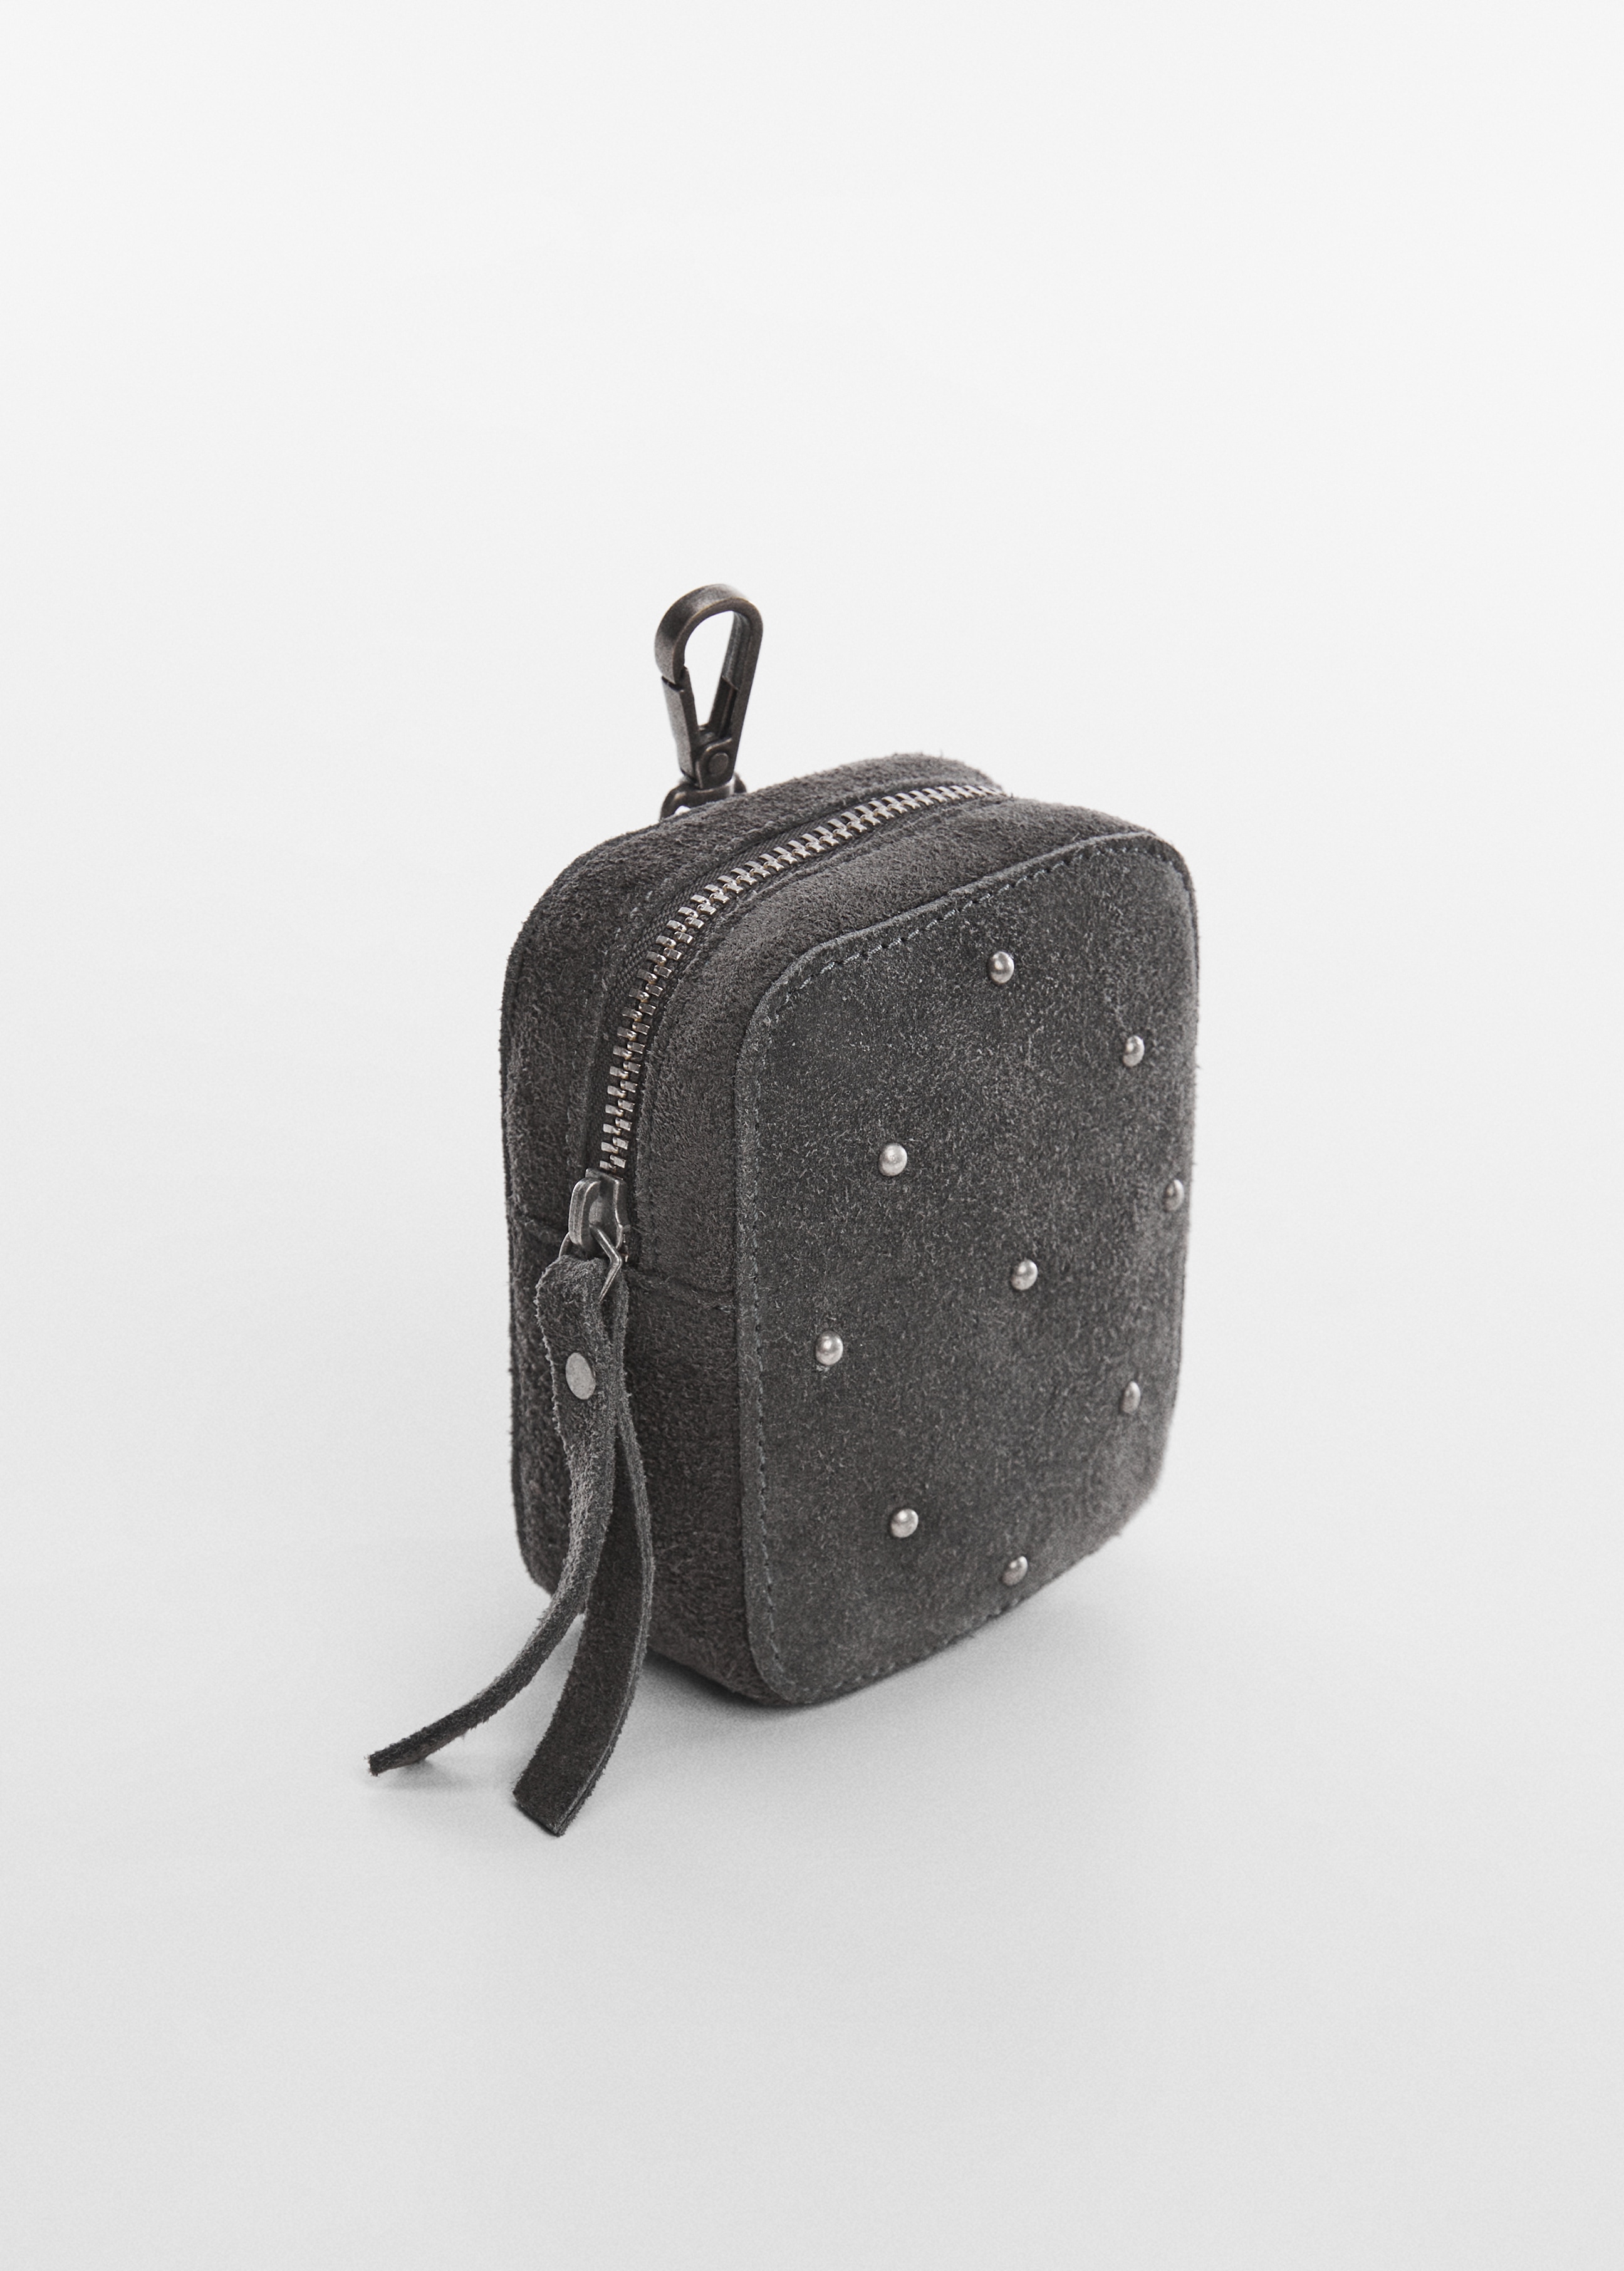 Zipped leather wallet - Medium plane